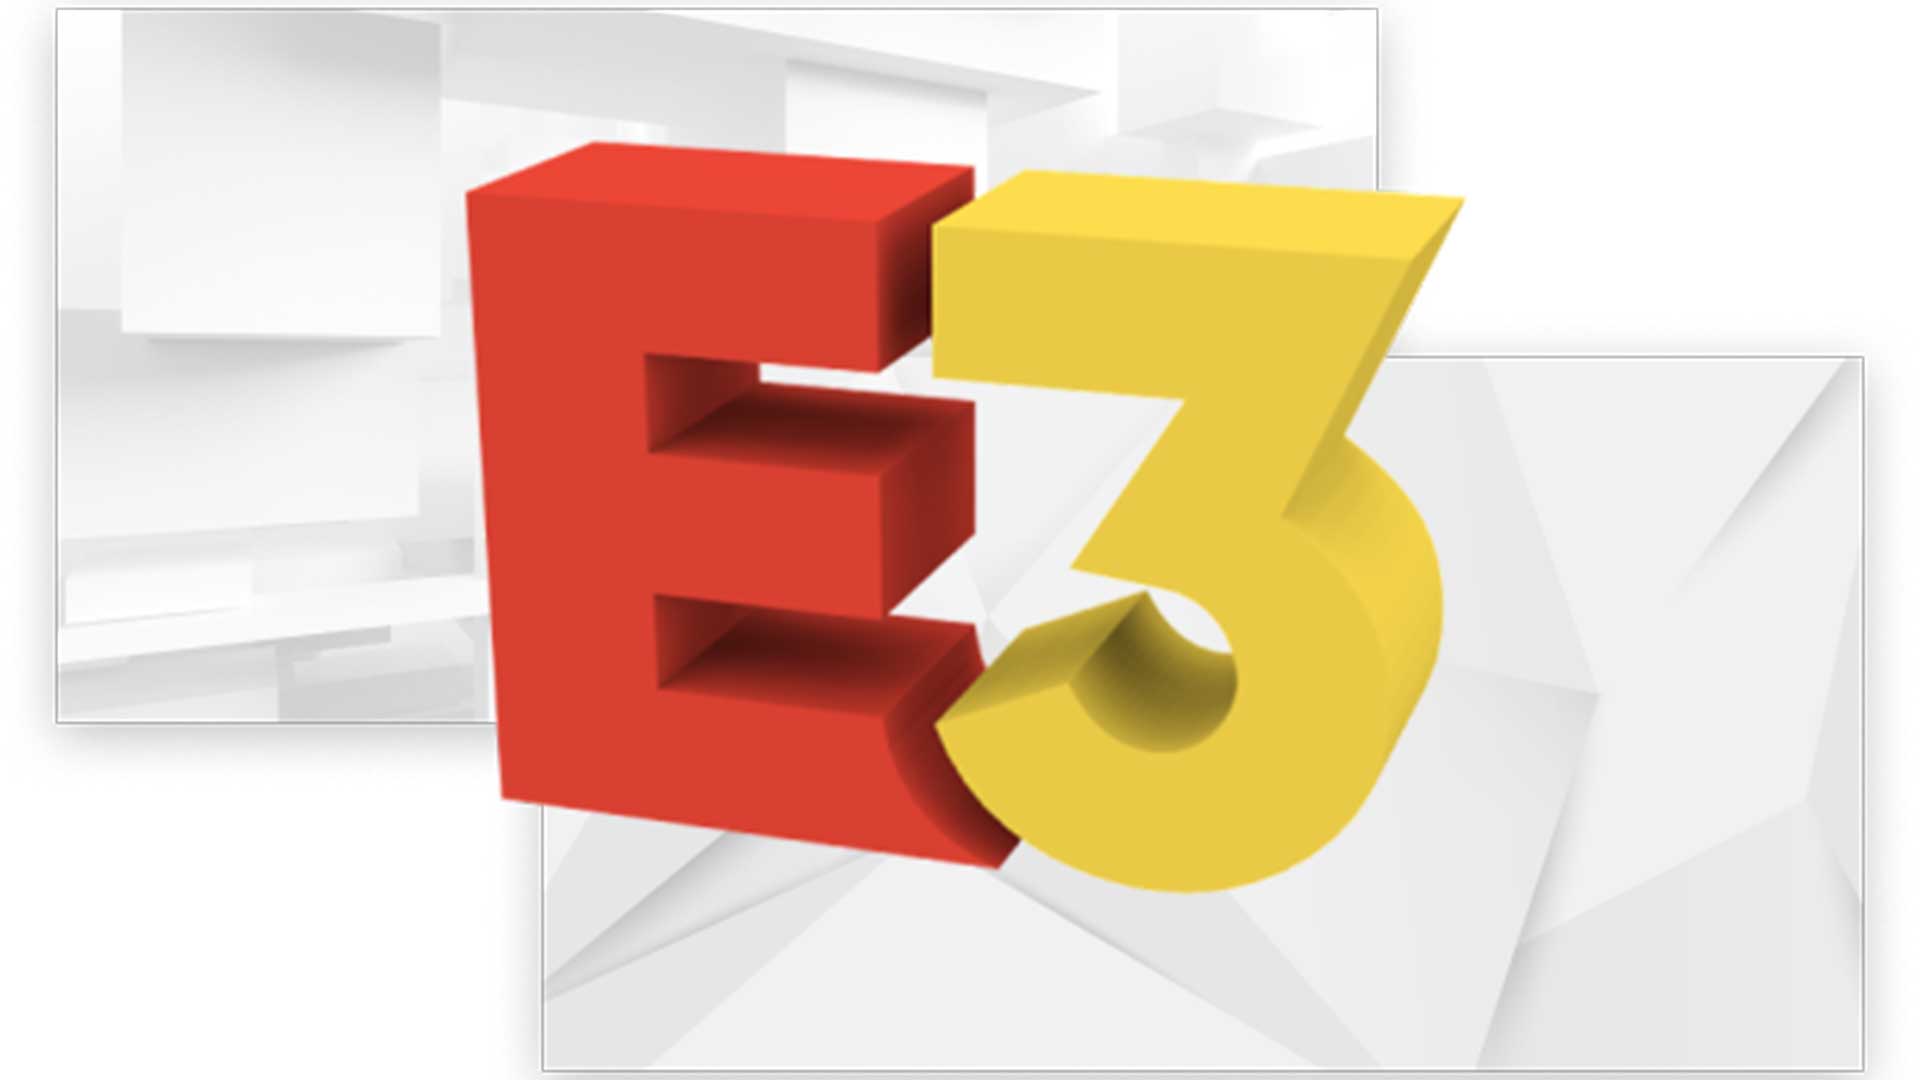 E3 2021 confirma evento totalmente virtual e gratuito